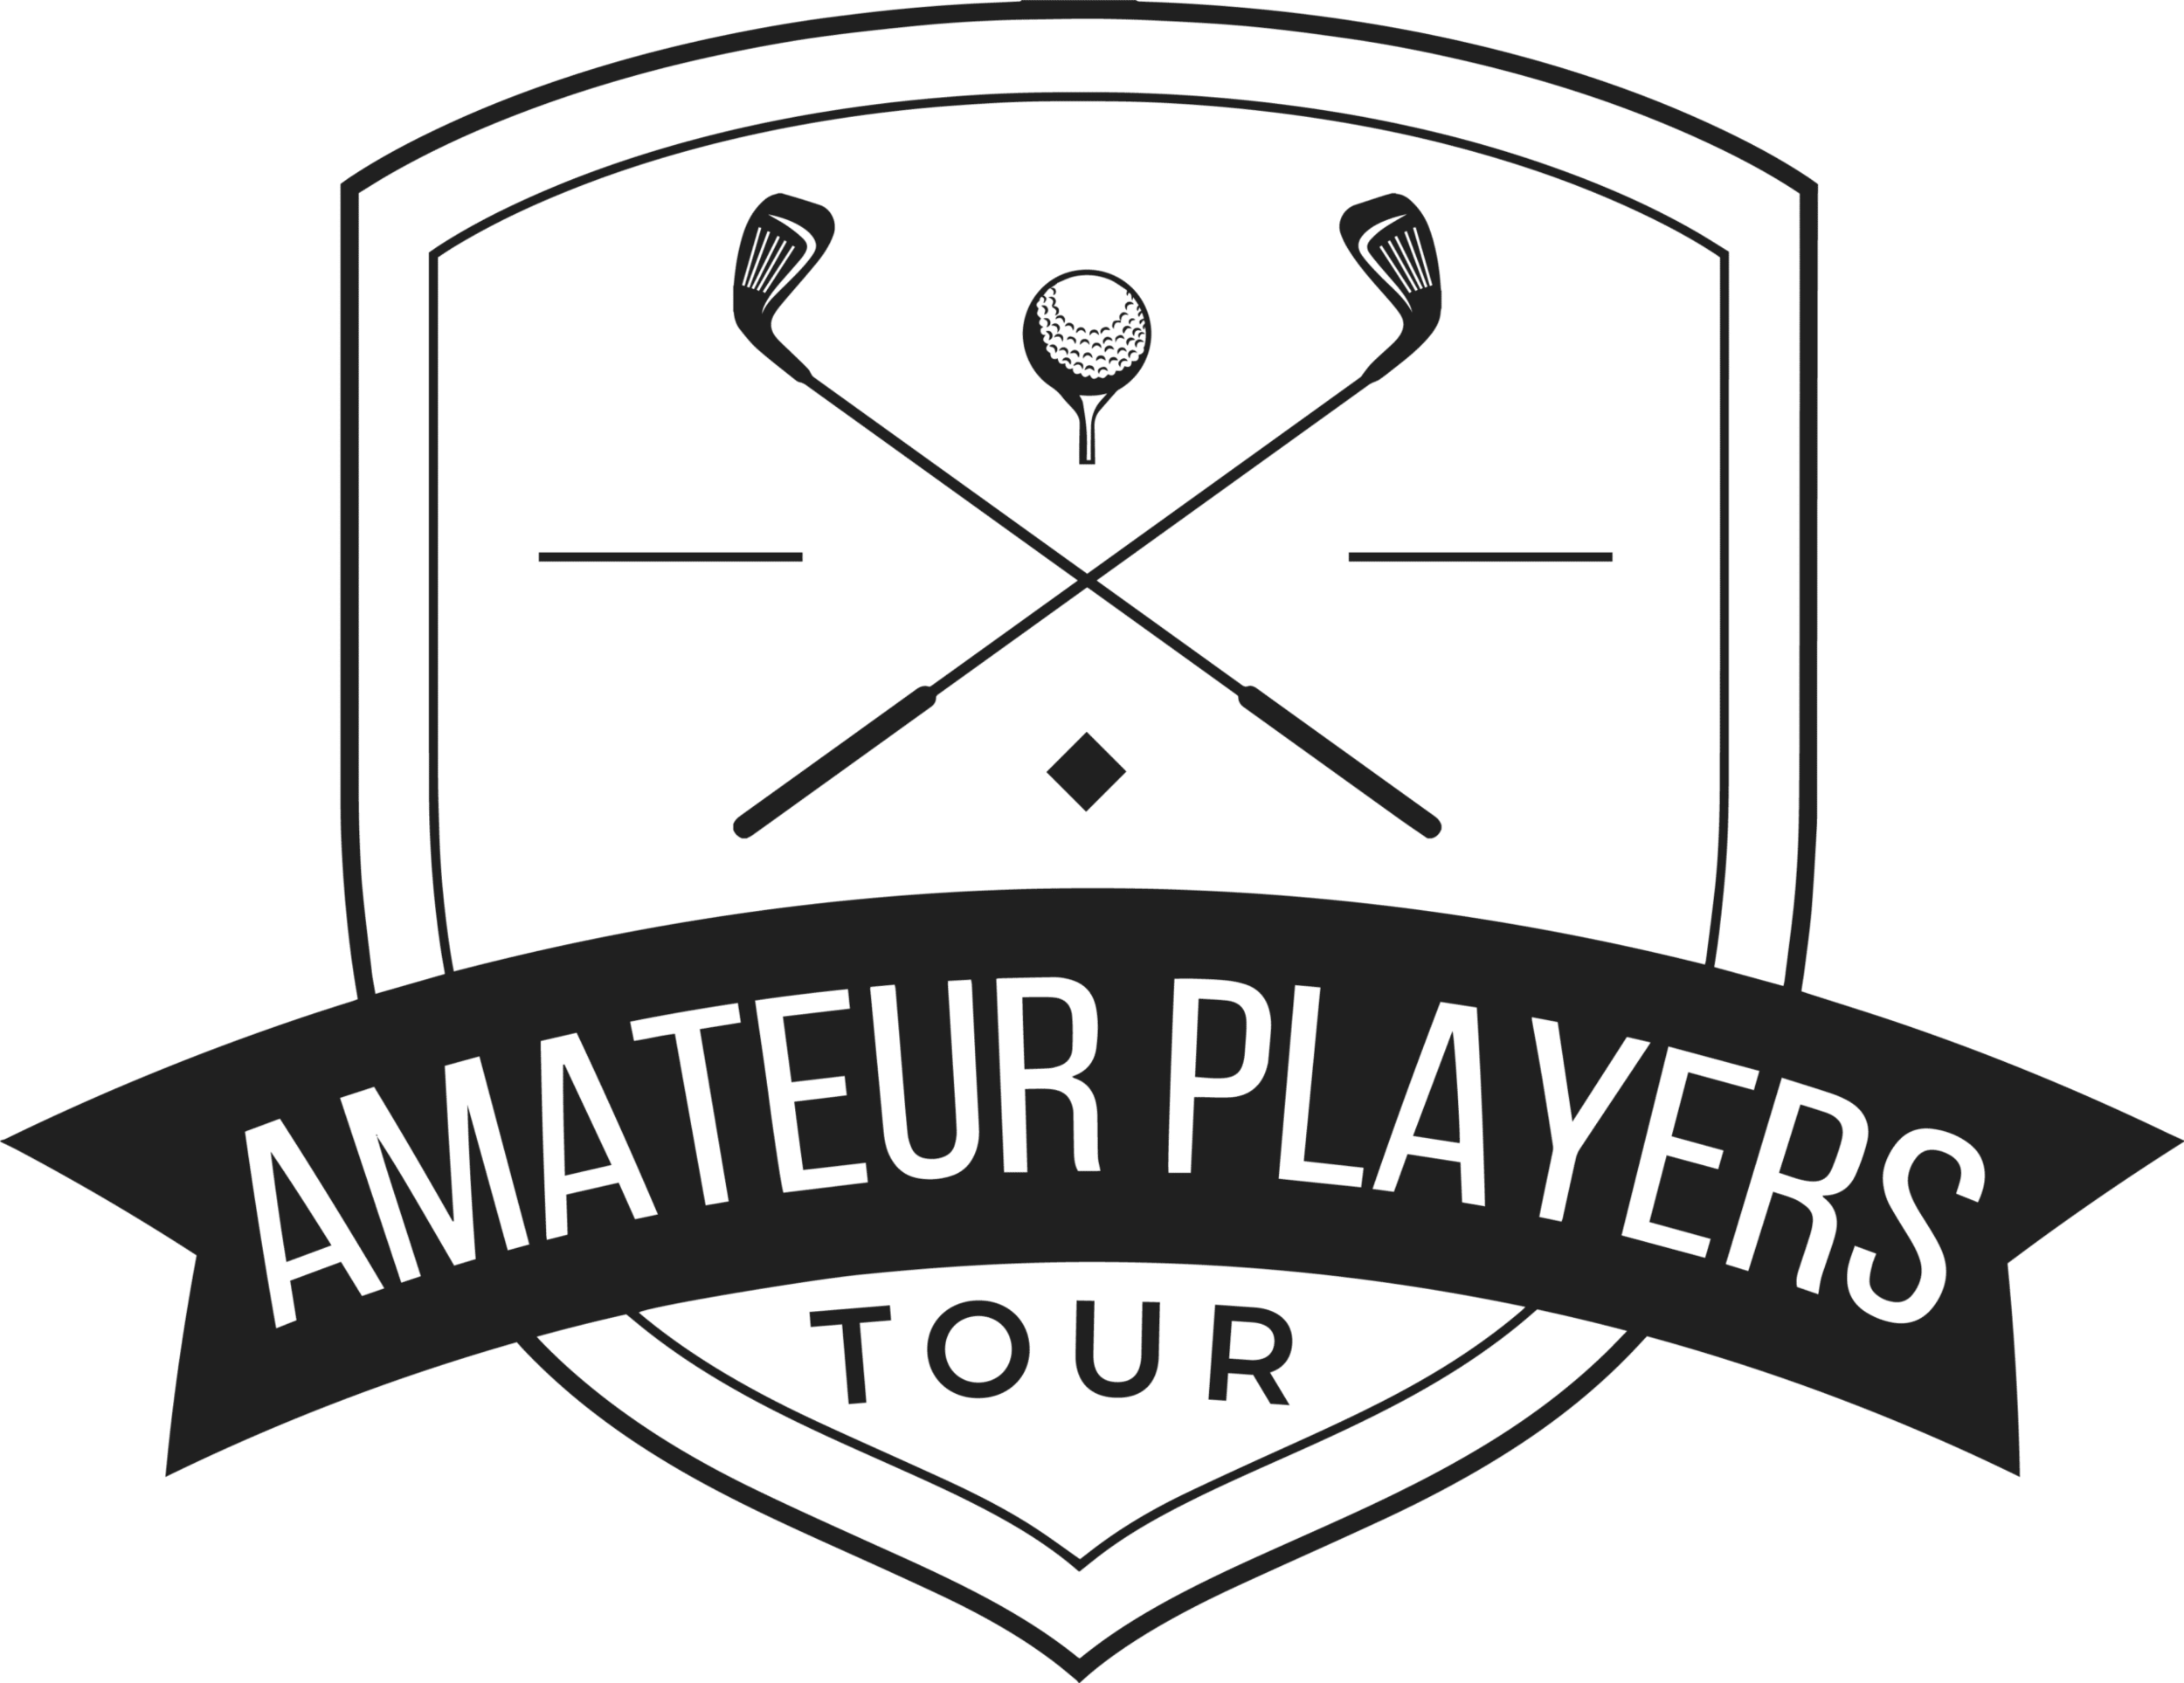 players amatuer tour